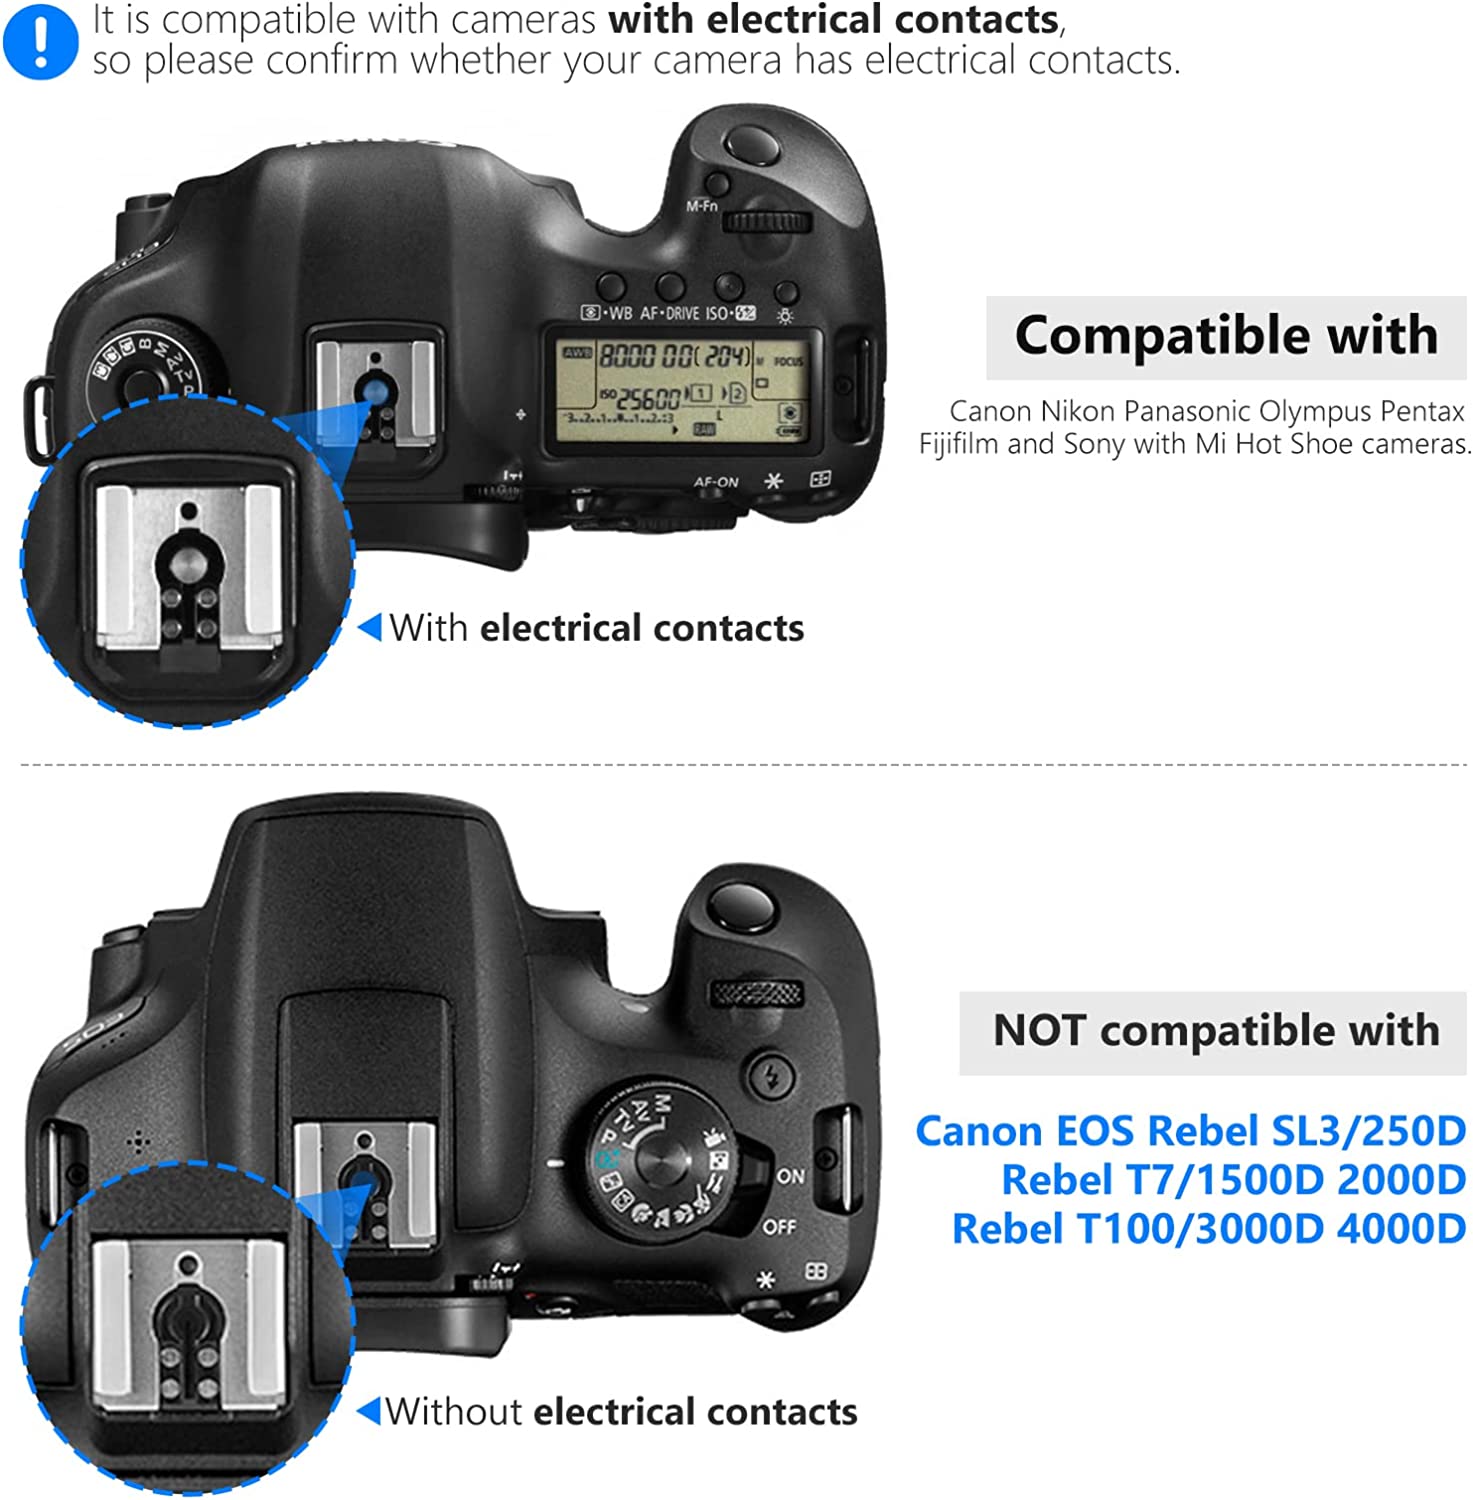 فلاش دوربین کانن Neewer مدل TT560  - ارسال ۱۰ الی ۱۵ روز کاری